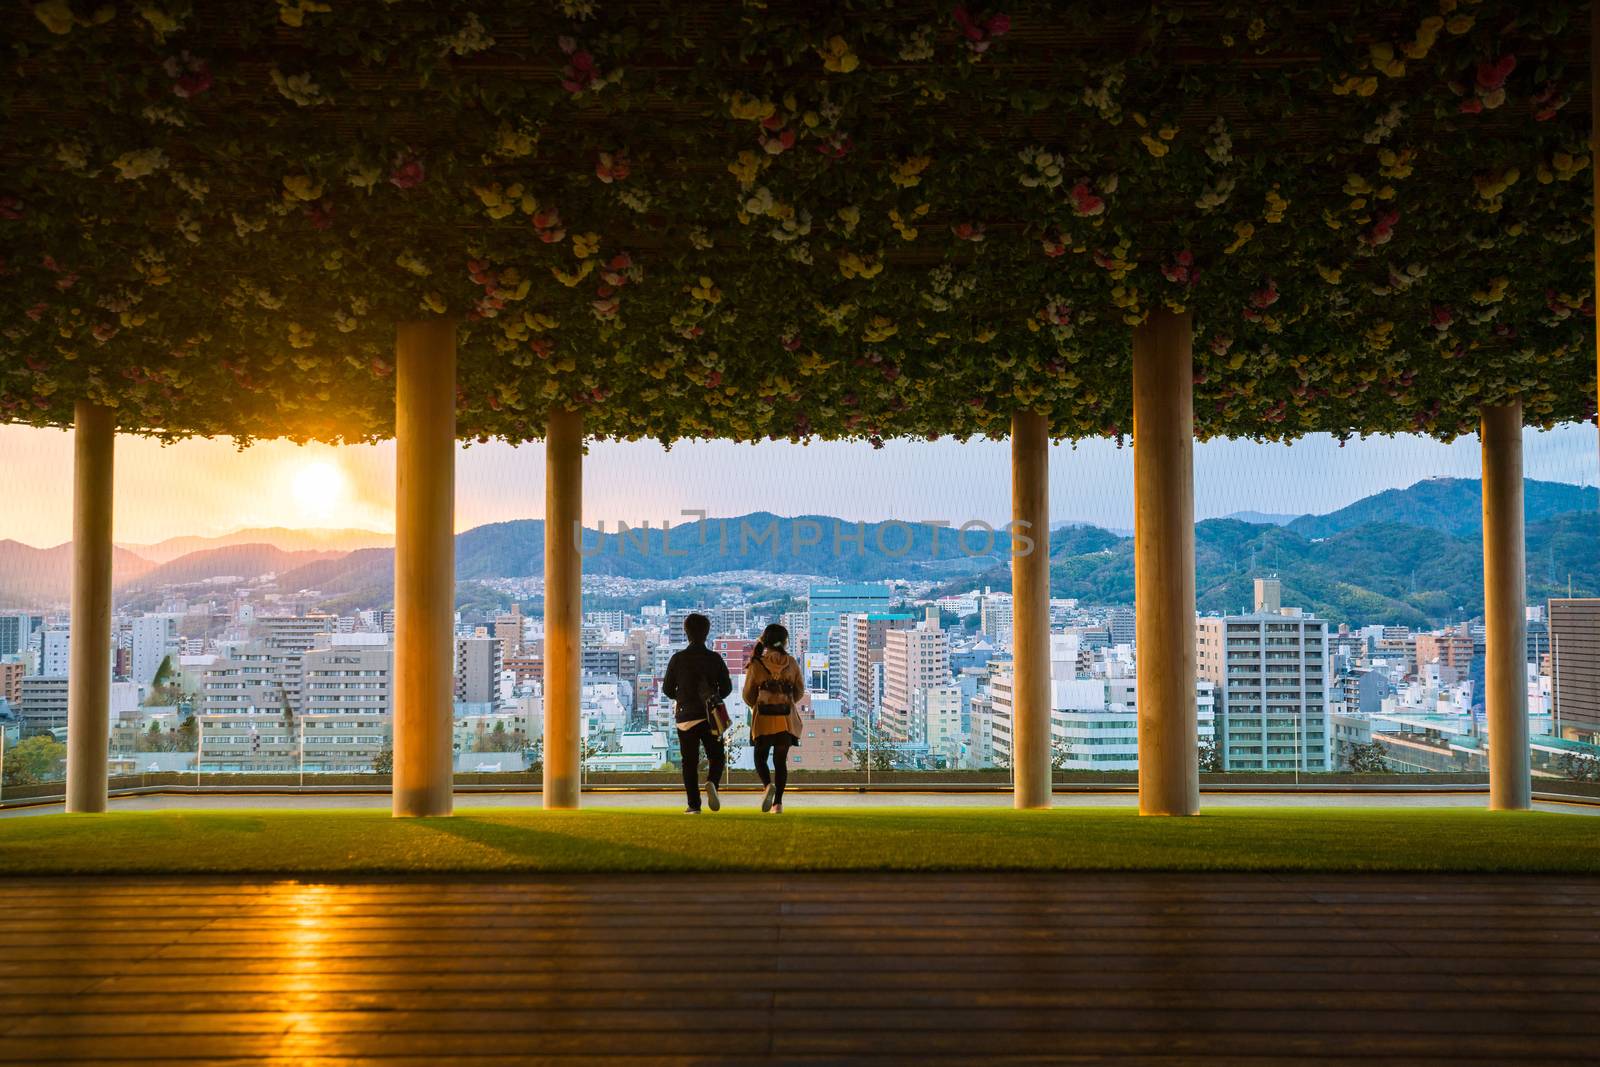 Hiroshima Peace Memorial from top view in Hiroshima by f11photo